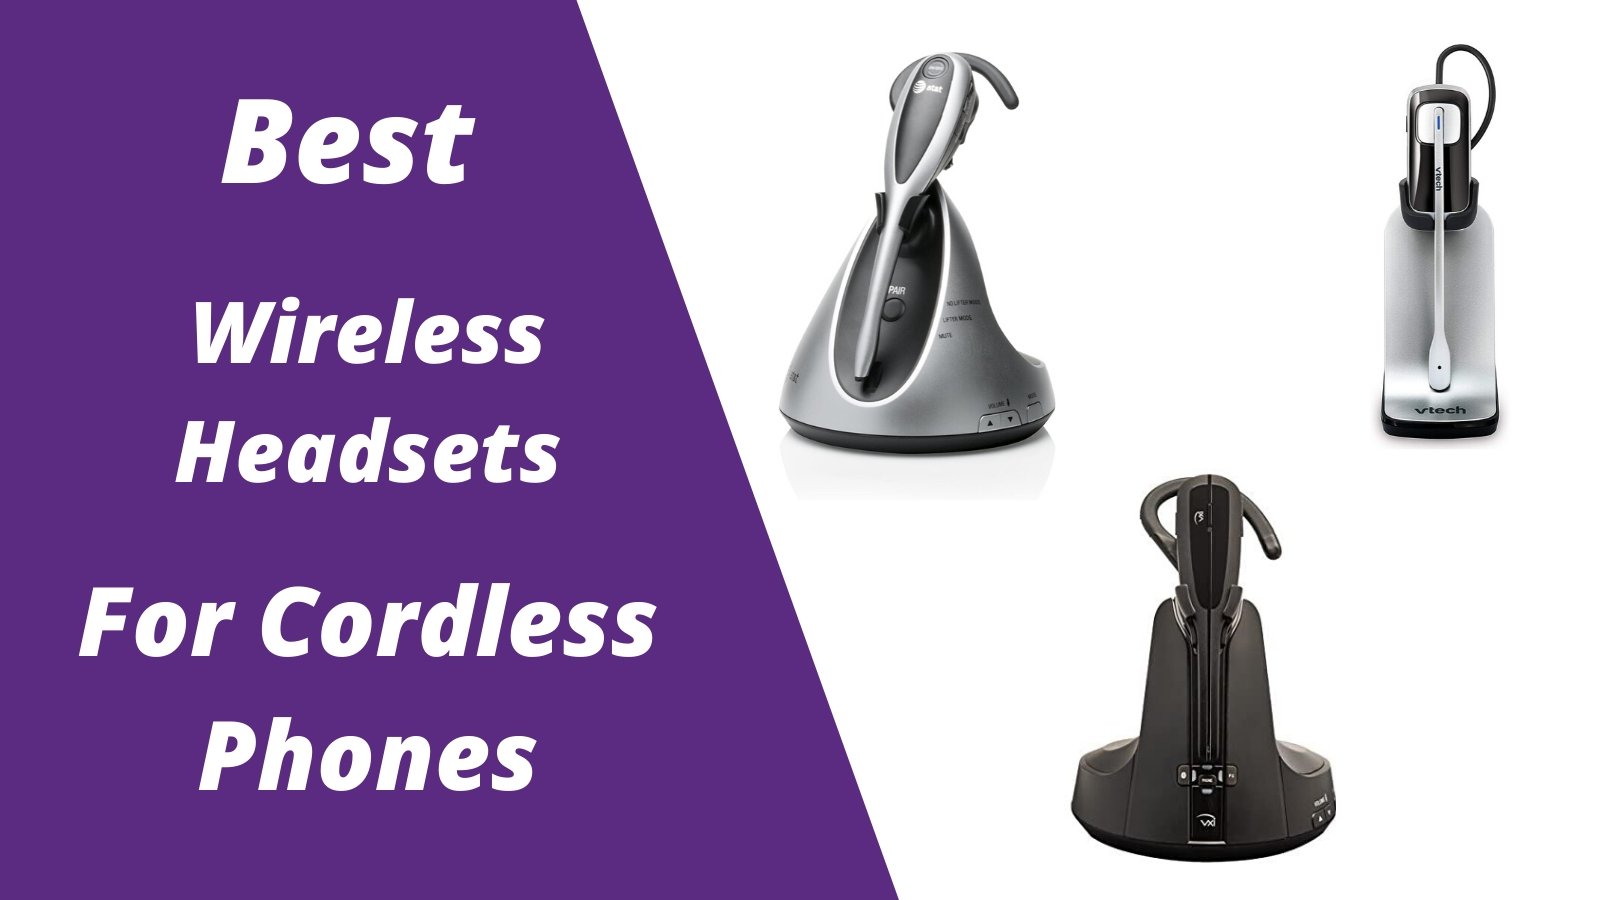 3 Best Wireless Headsets For Cordless Phones - Headset Advisor